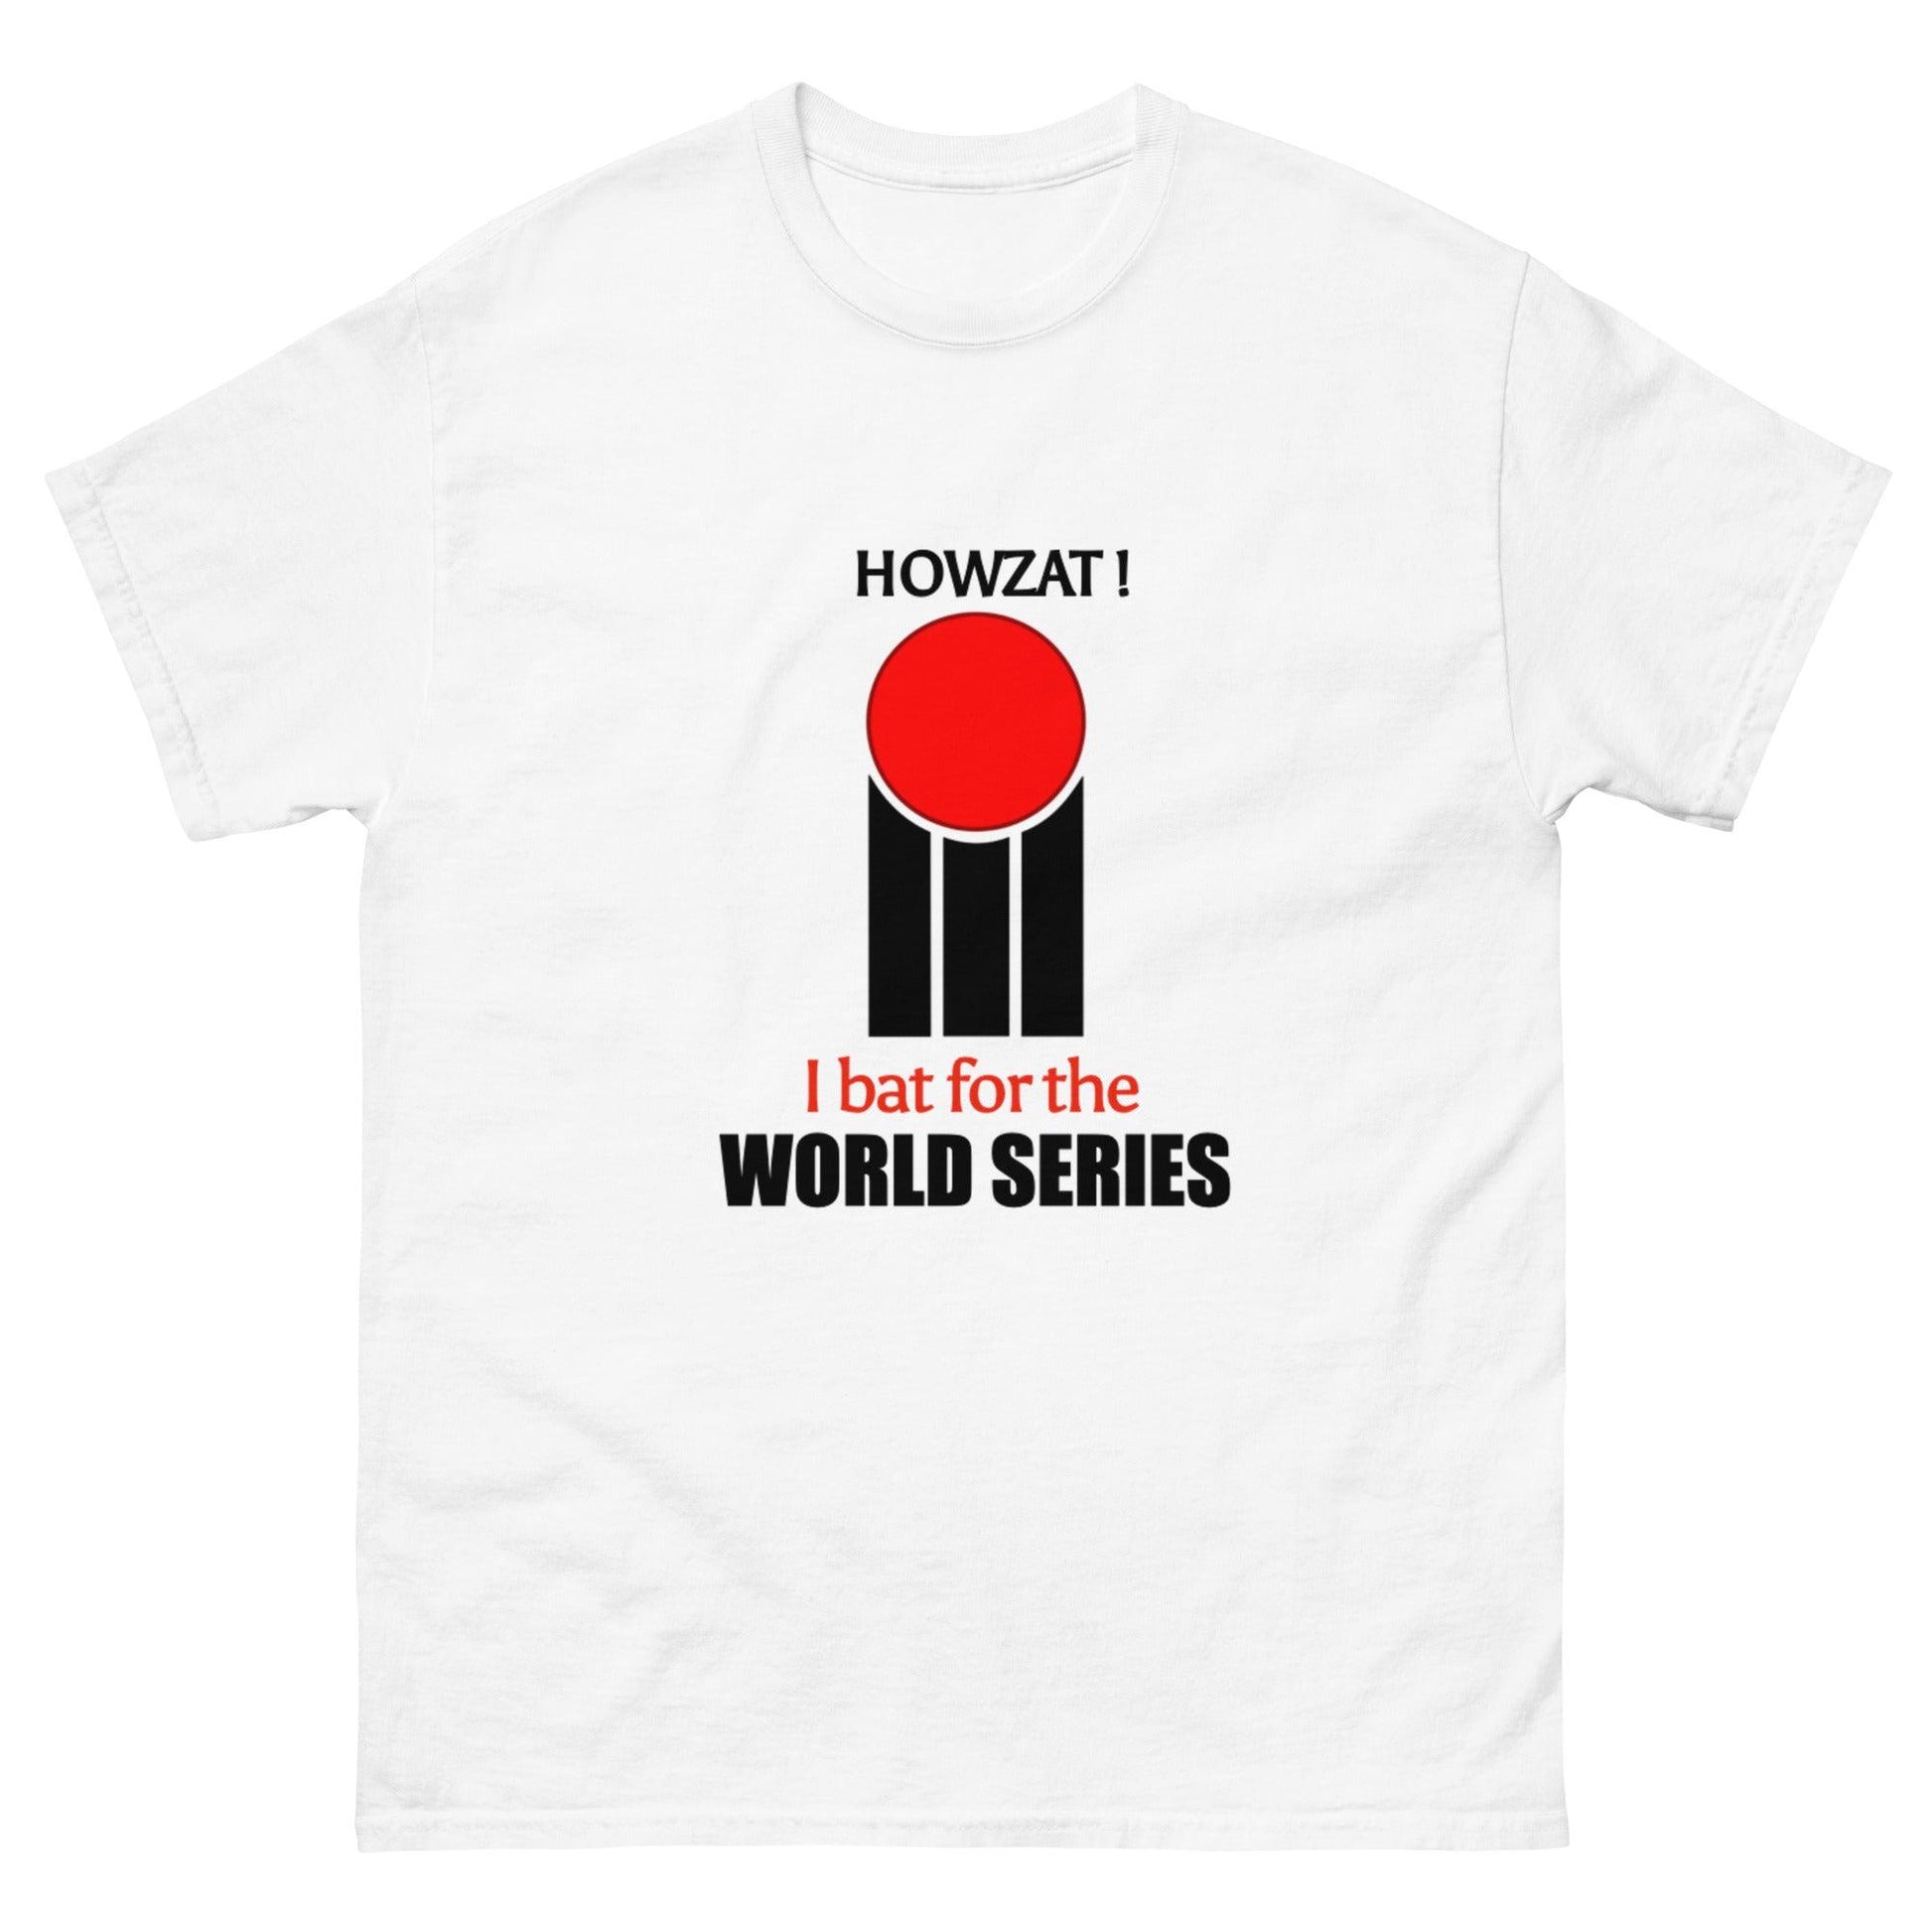 World Series Cricket retro t-shirt by Game Yarns